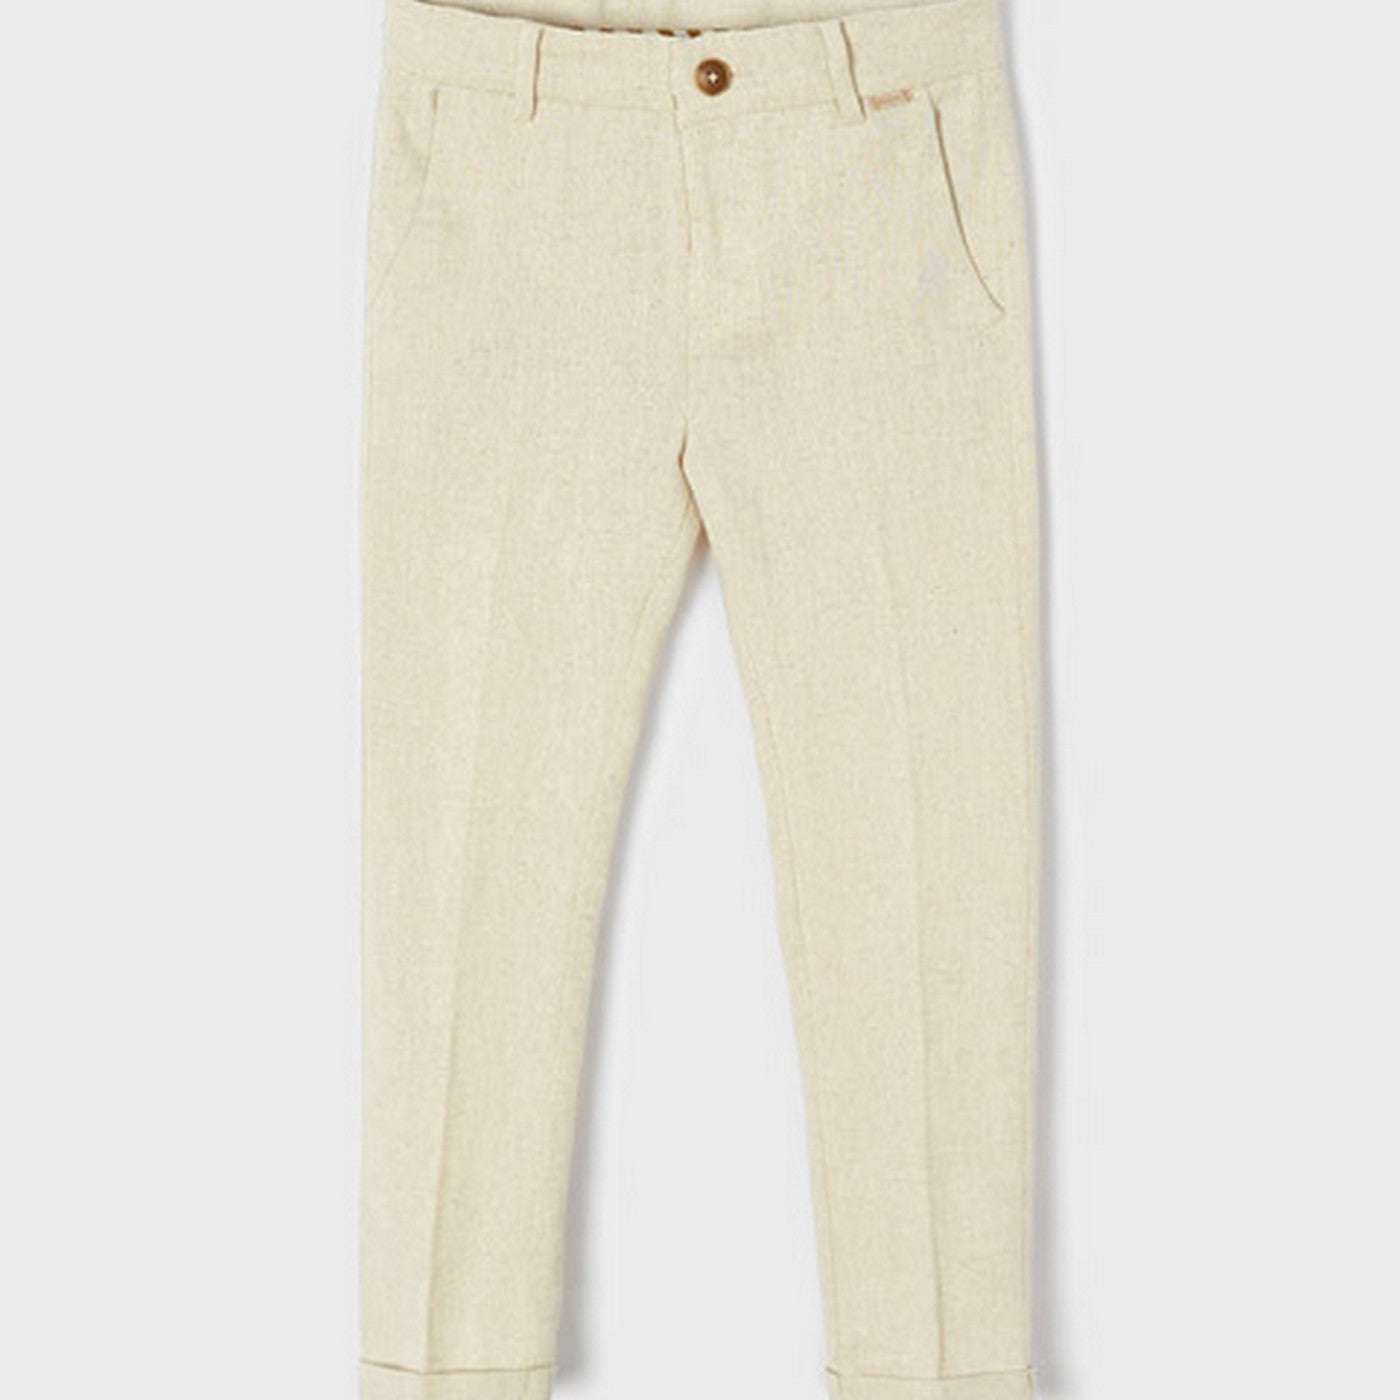 Pantalone Lungo In Cotone Neonato MAYORAL 3576 - MAYORAL - LuxuryKids